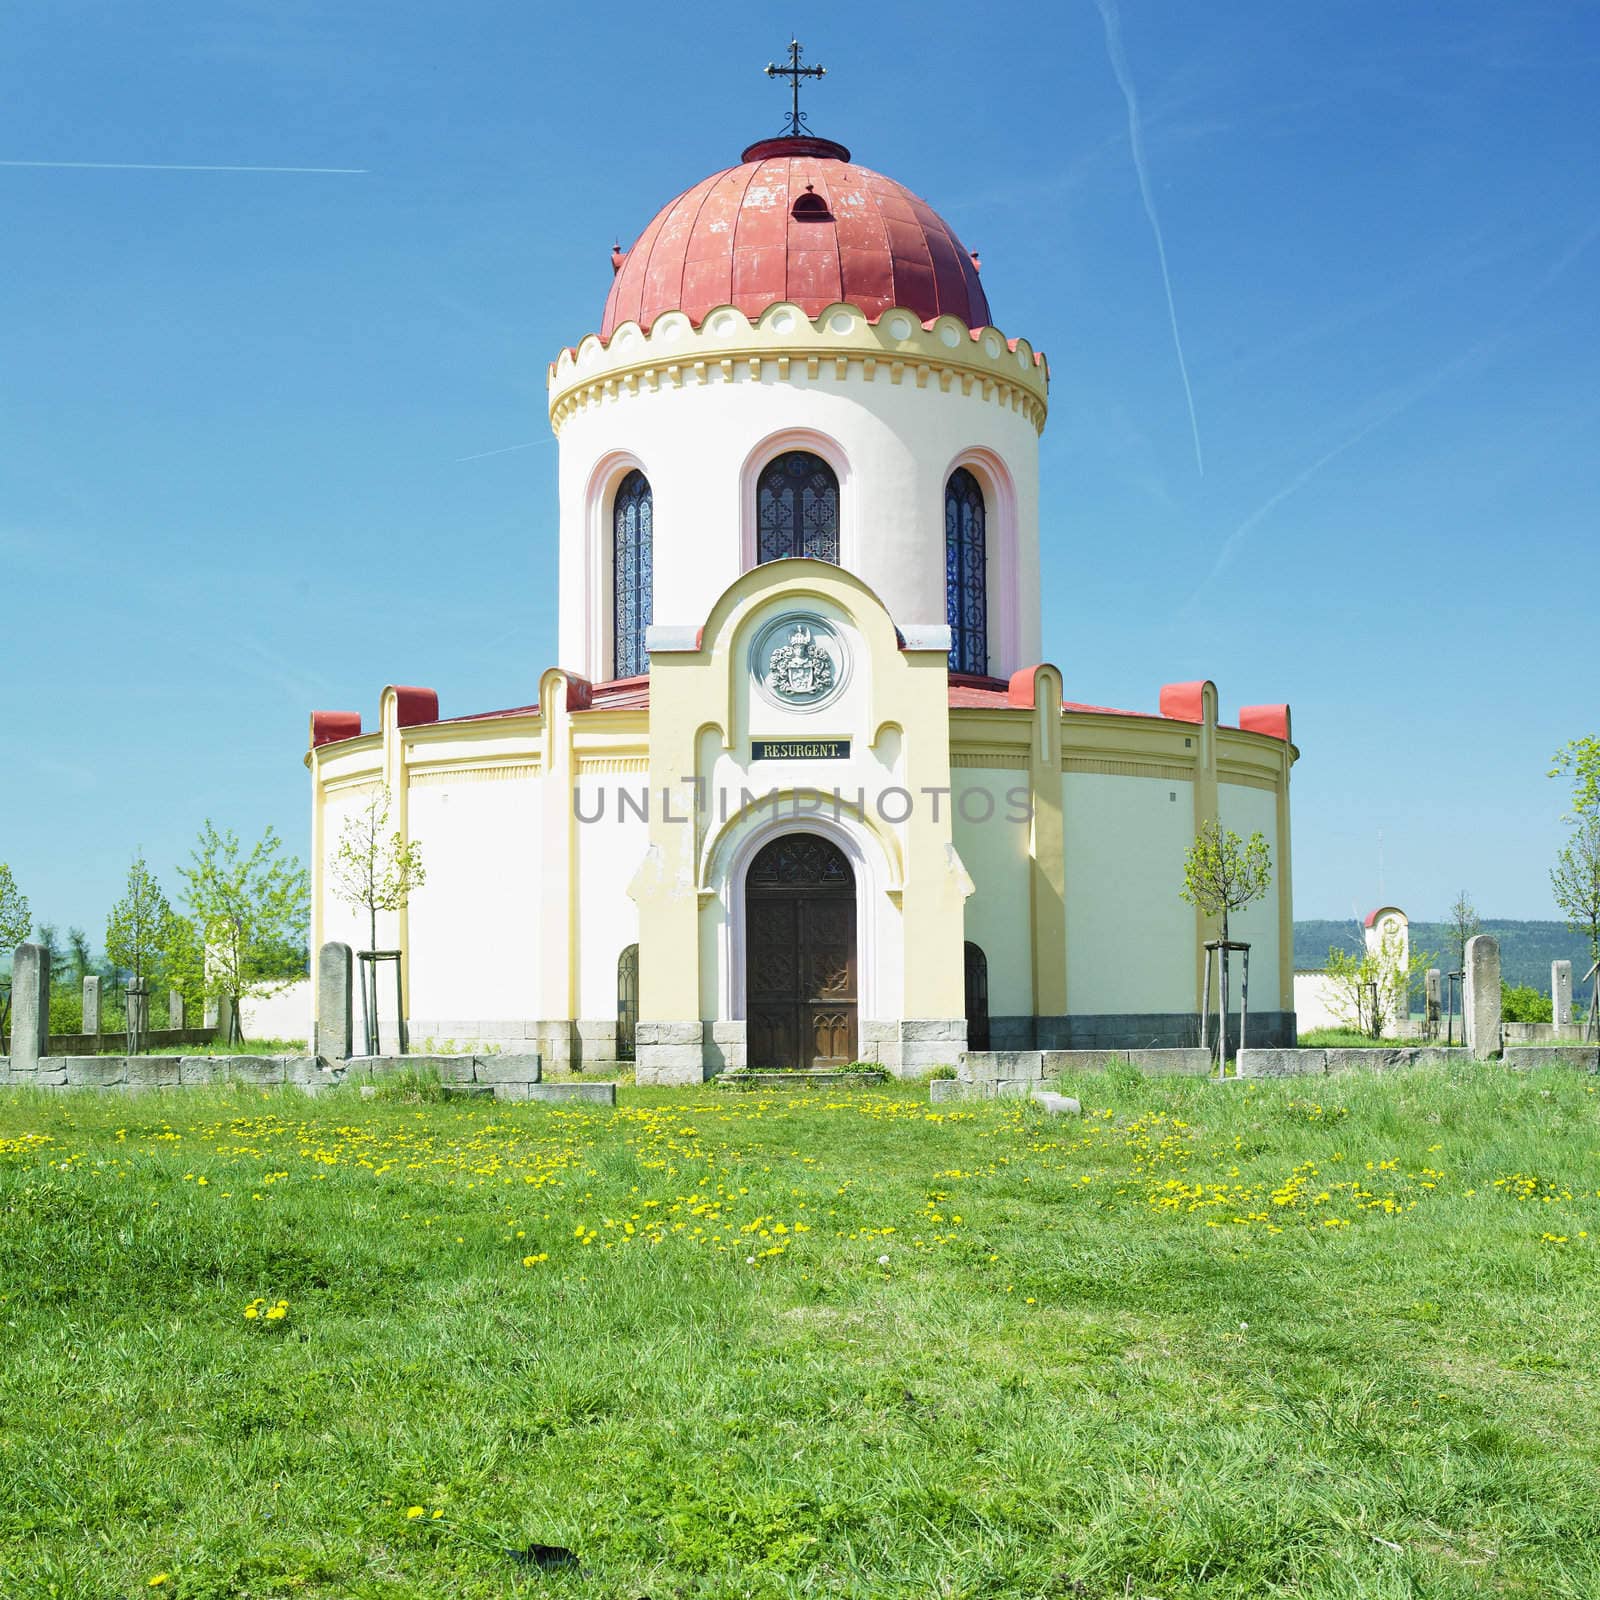 chapel, Nectiny, Czech Republic by phbcz